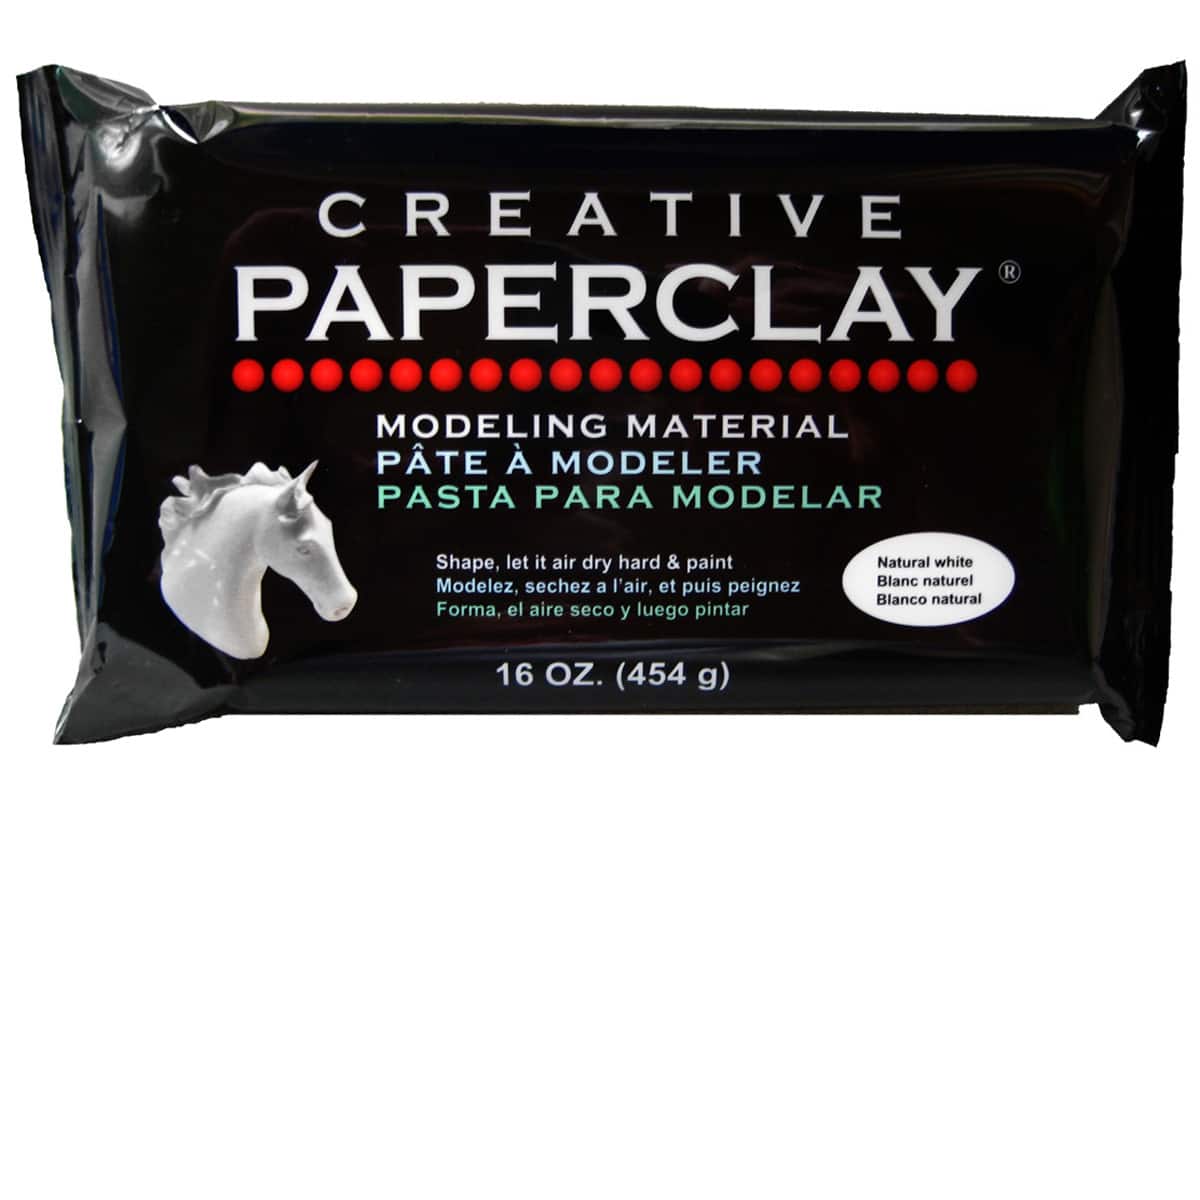 Creative Paperclay (@creativepaperclay) • Instagram photos and videos